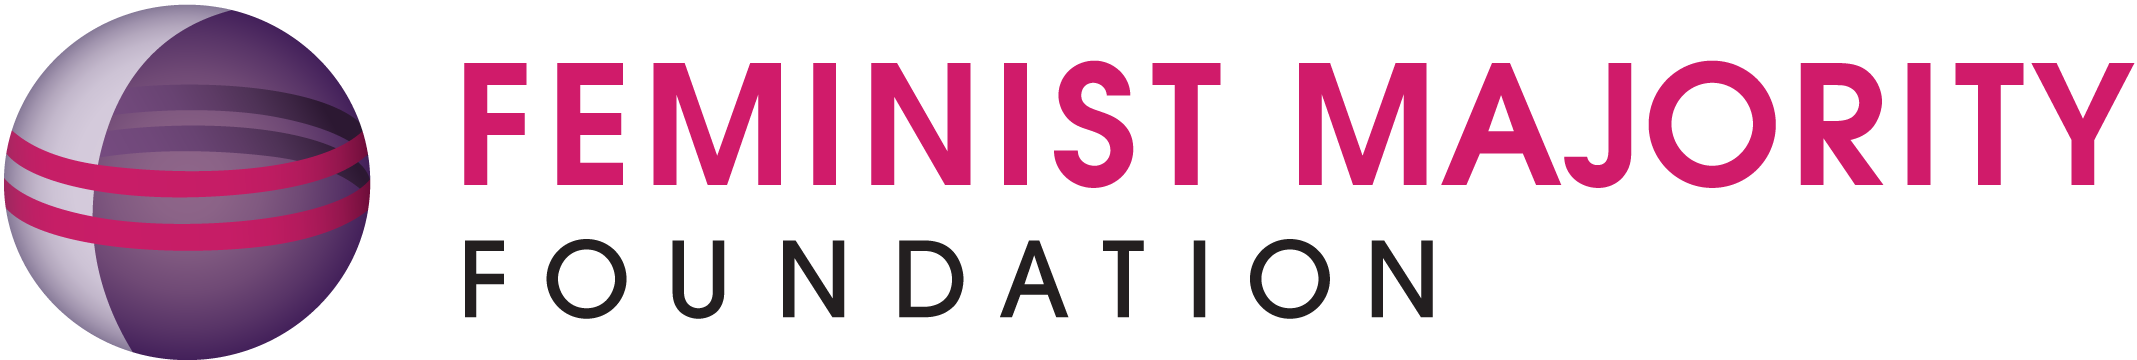 Feminist Majority Foundation icon